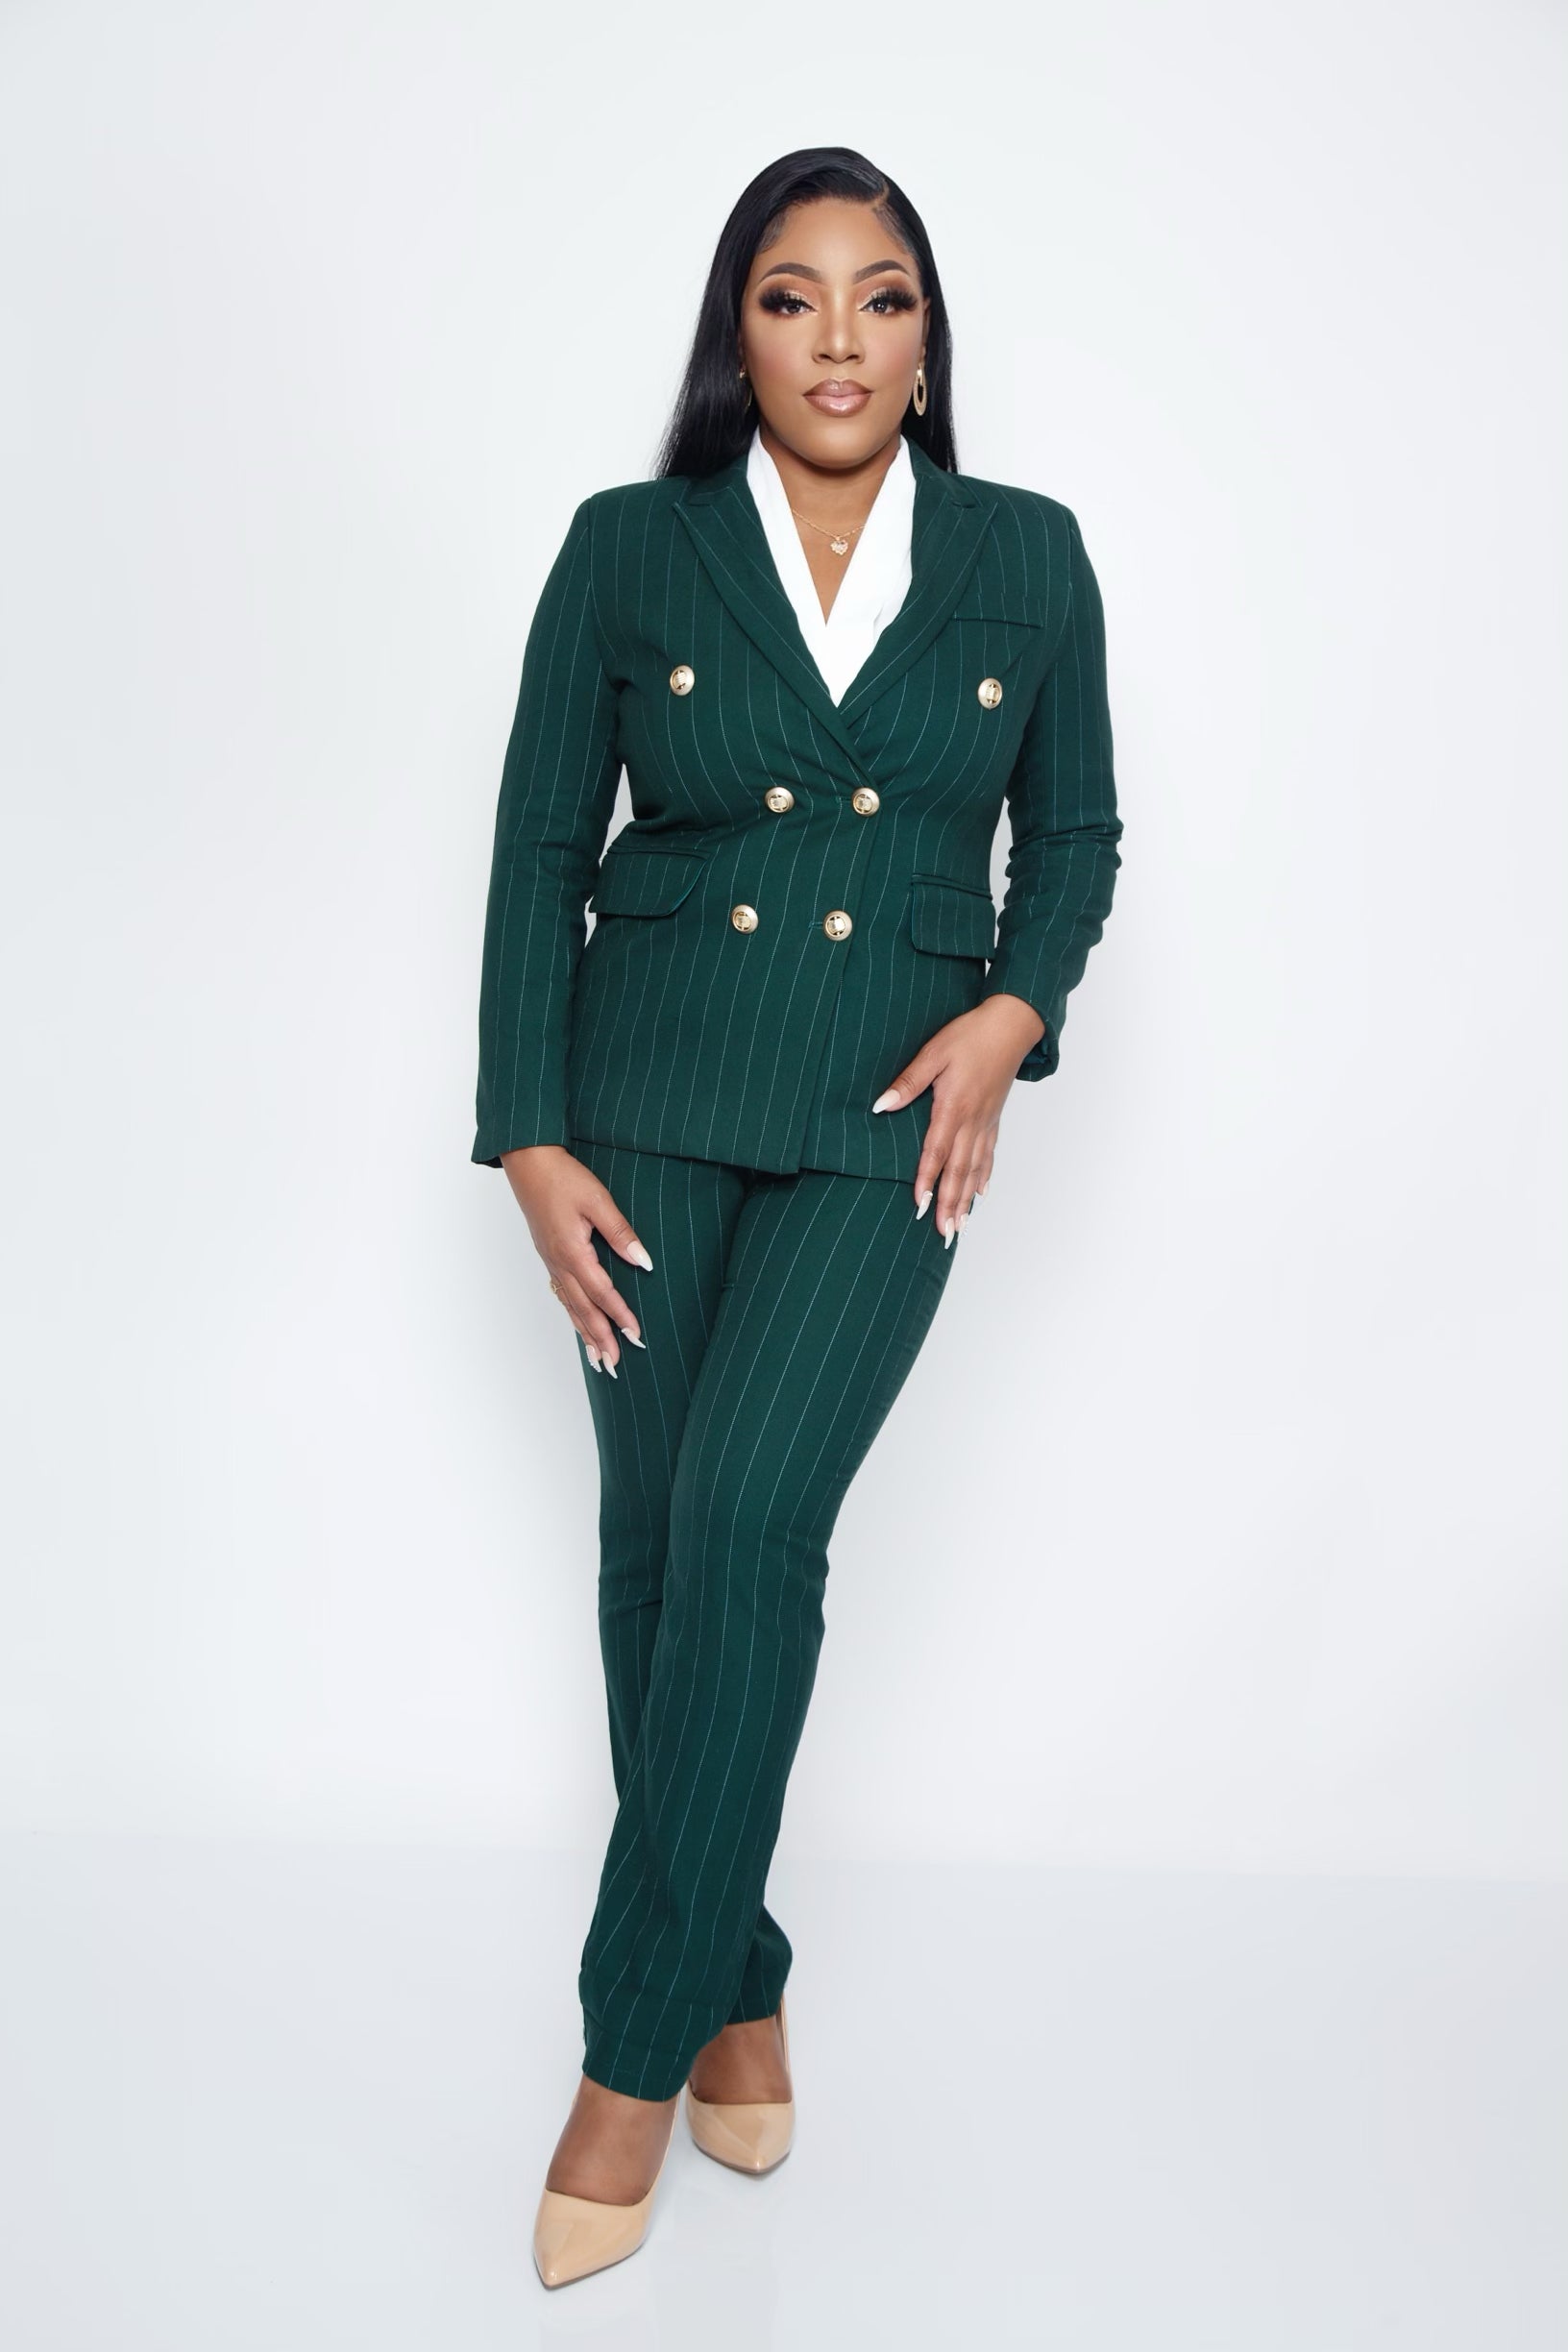 Women's green professional suit